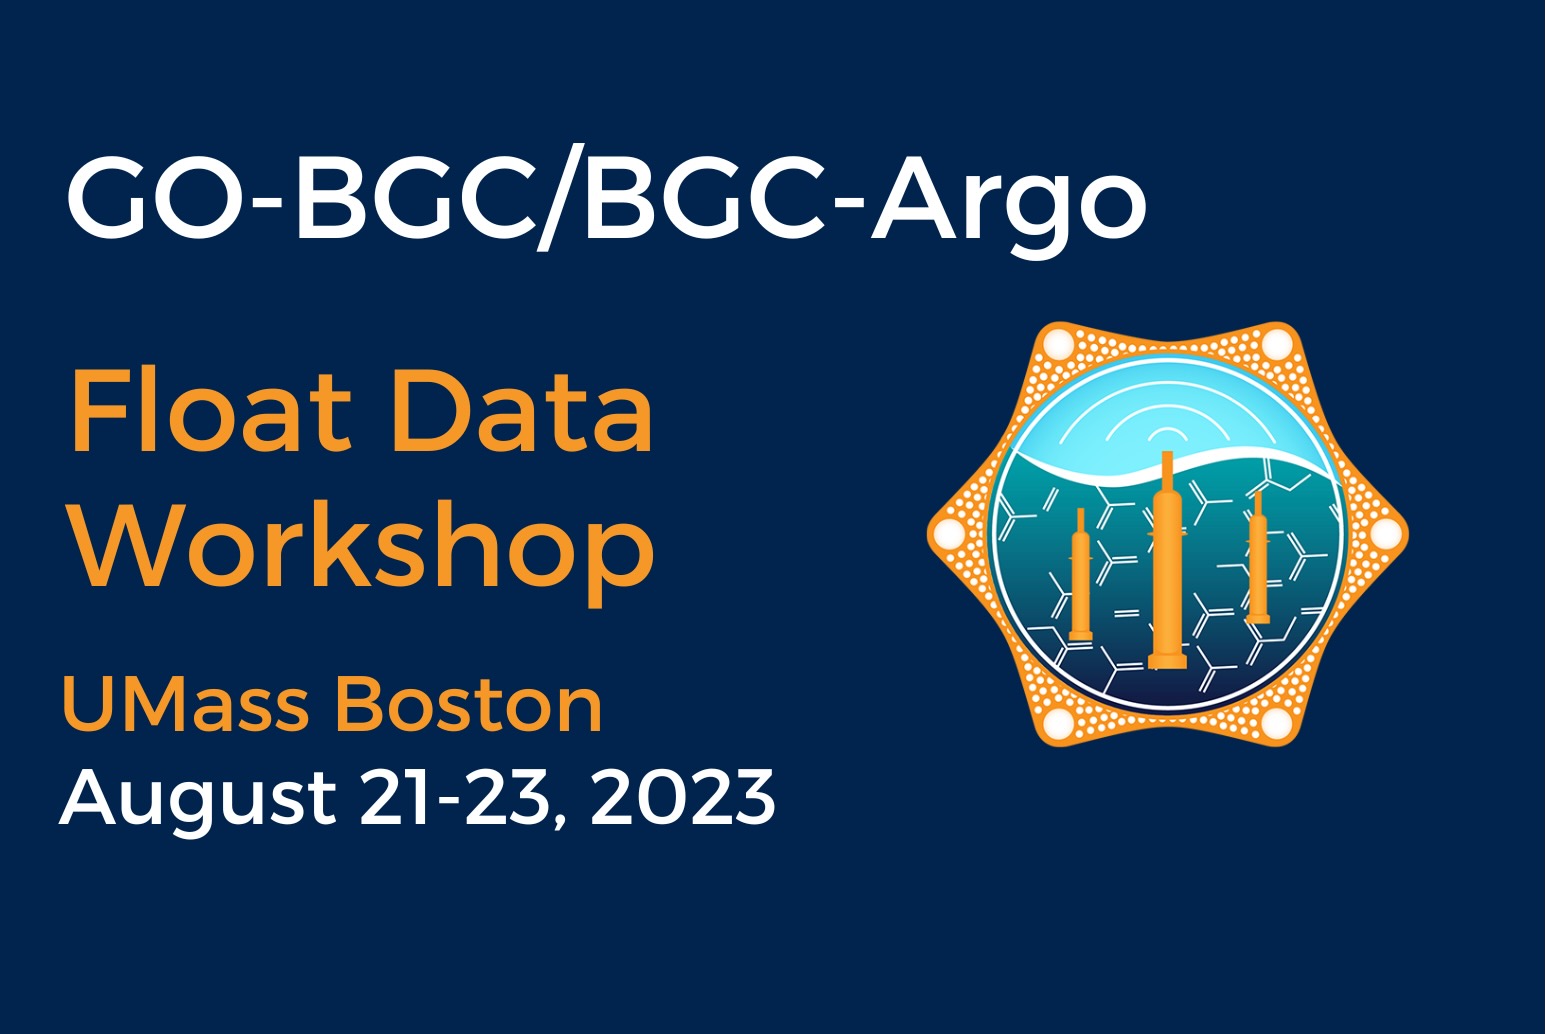 GO-BGC/BGC-Argo Float Data Workshop flyer